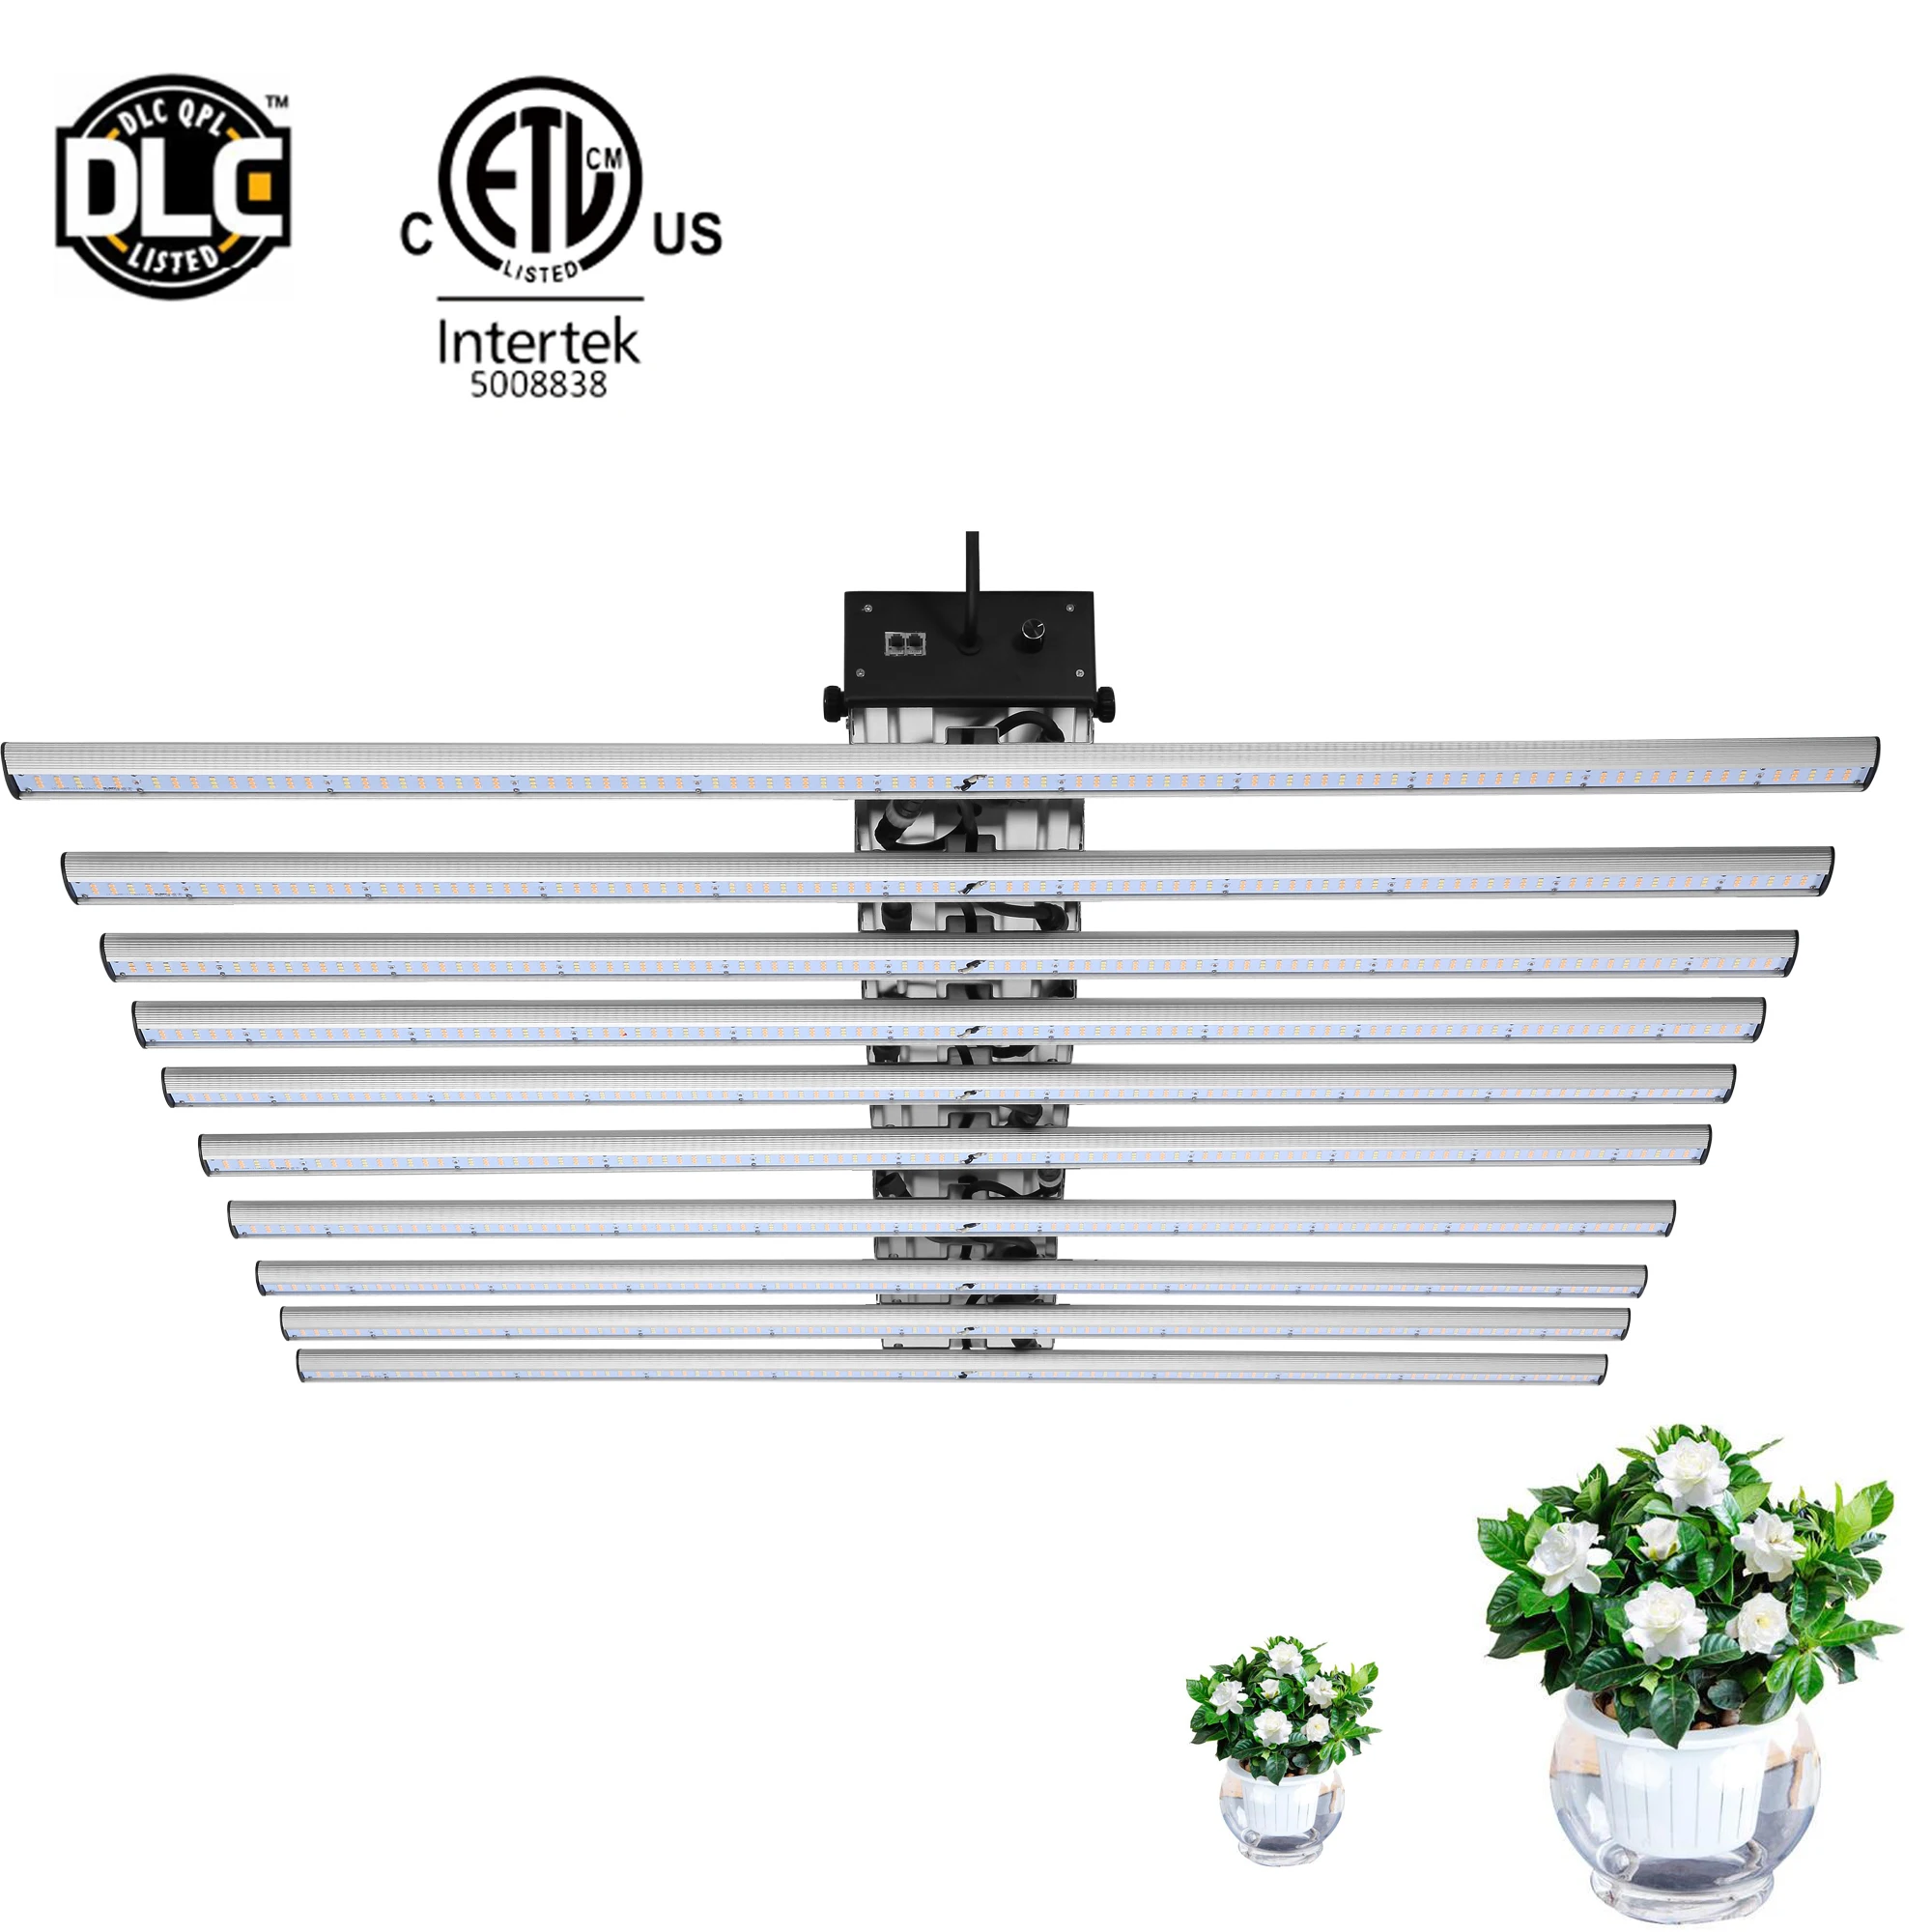 A Newest Best Hydroponic 800w 850w 1000w Full Spectrum High Intensity Cob LED Plant Grow Light Bar grow light cob plant light